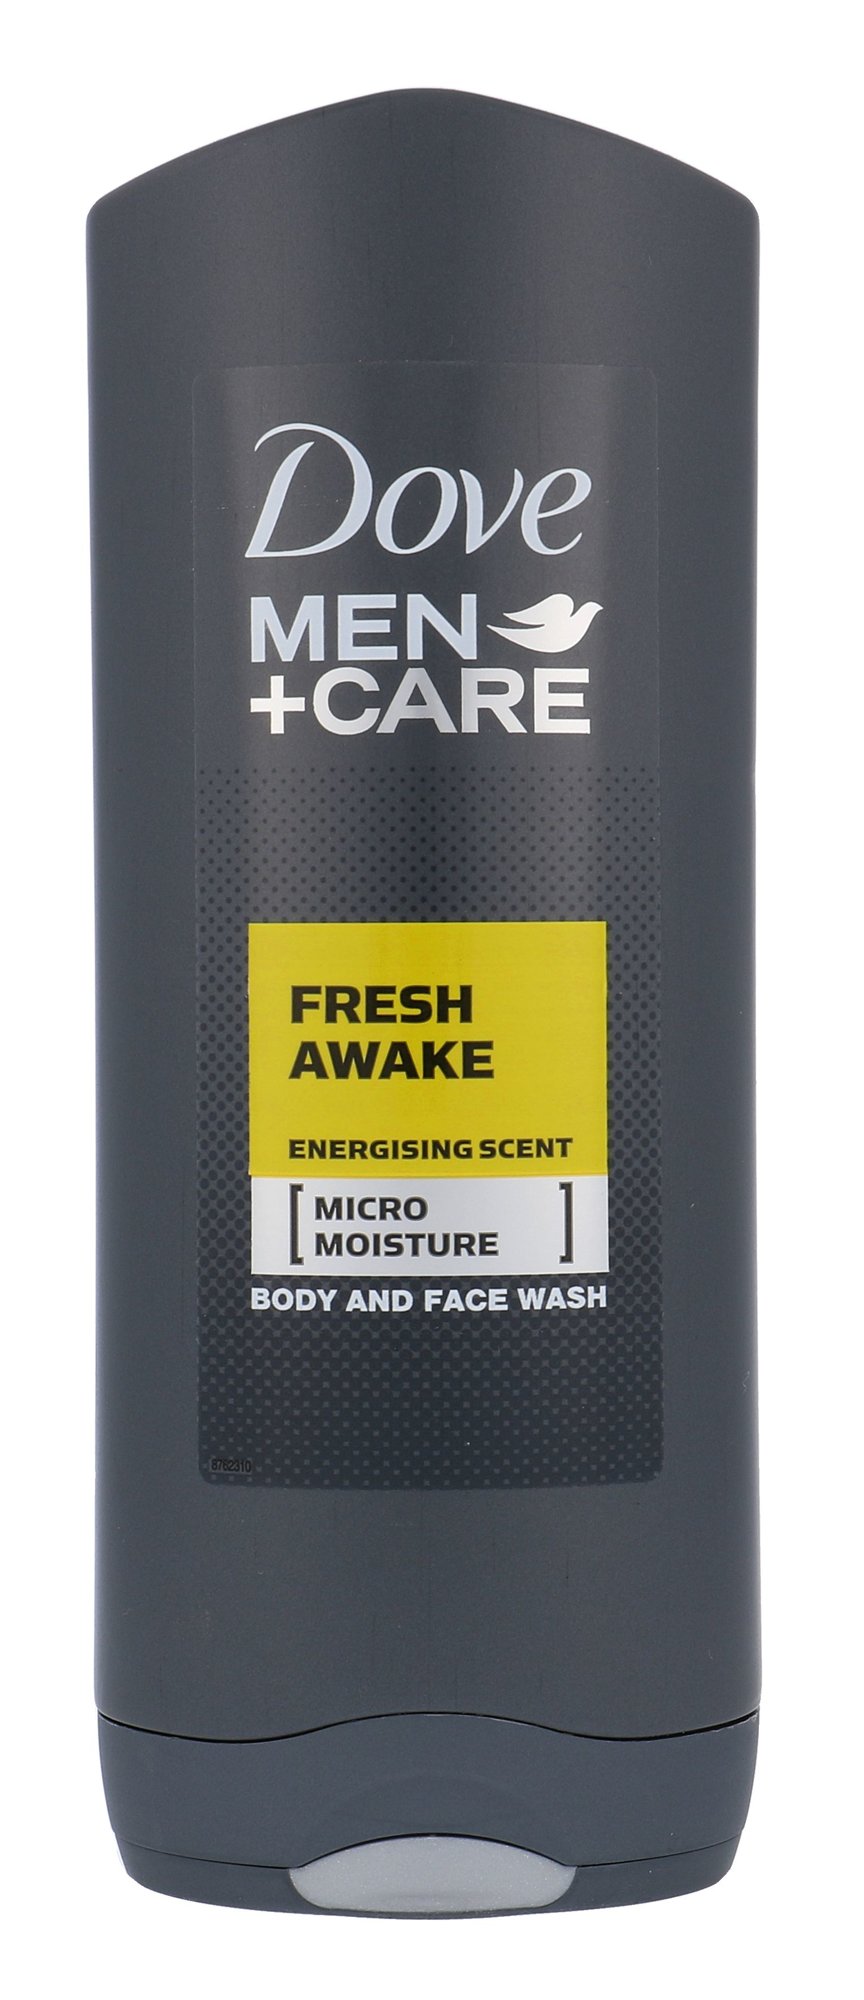 Dove Men + Care Fresh Awake Body And Face Wash